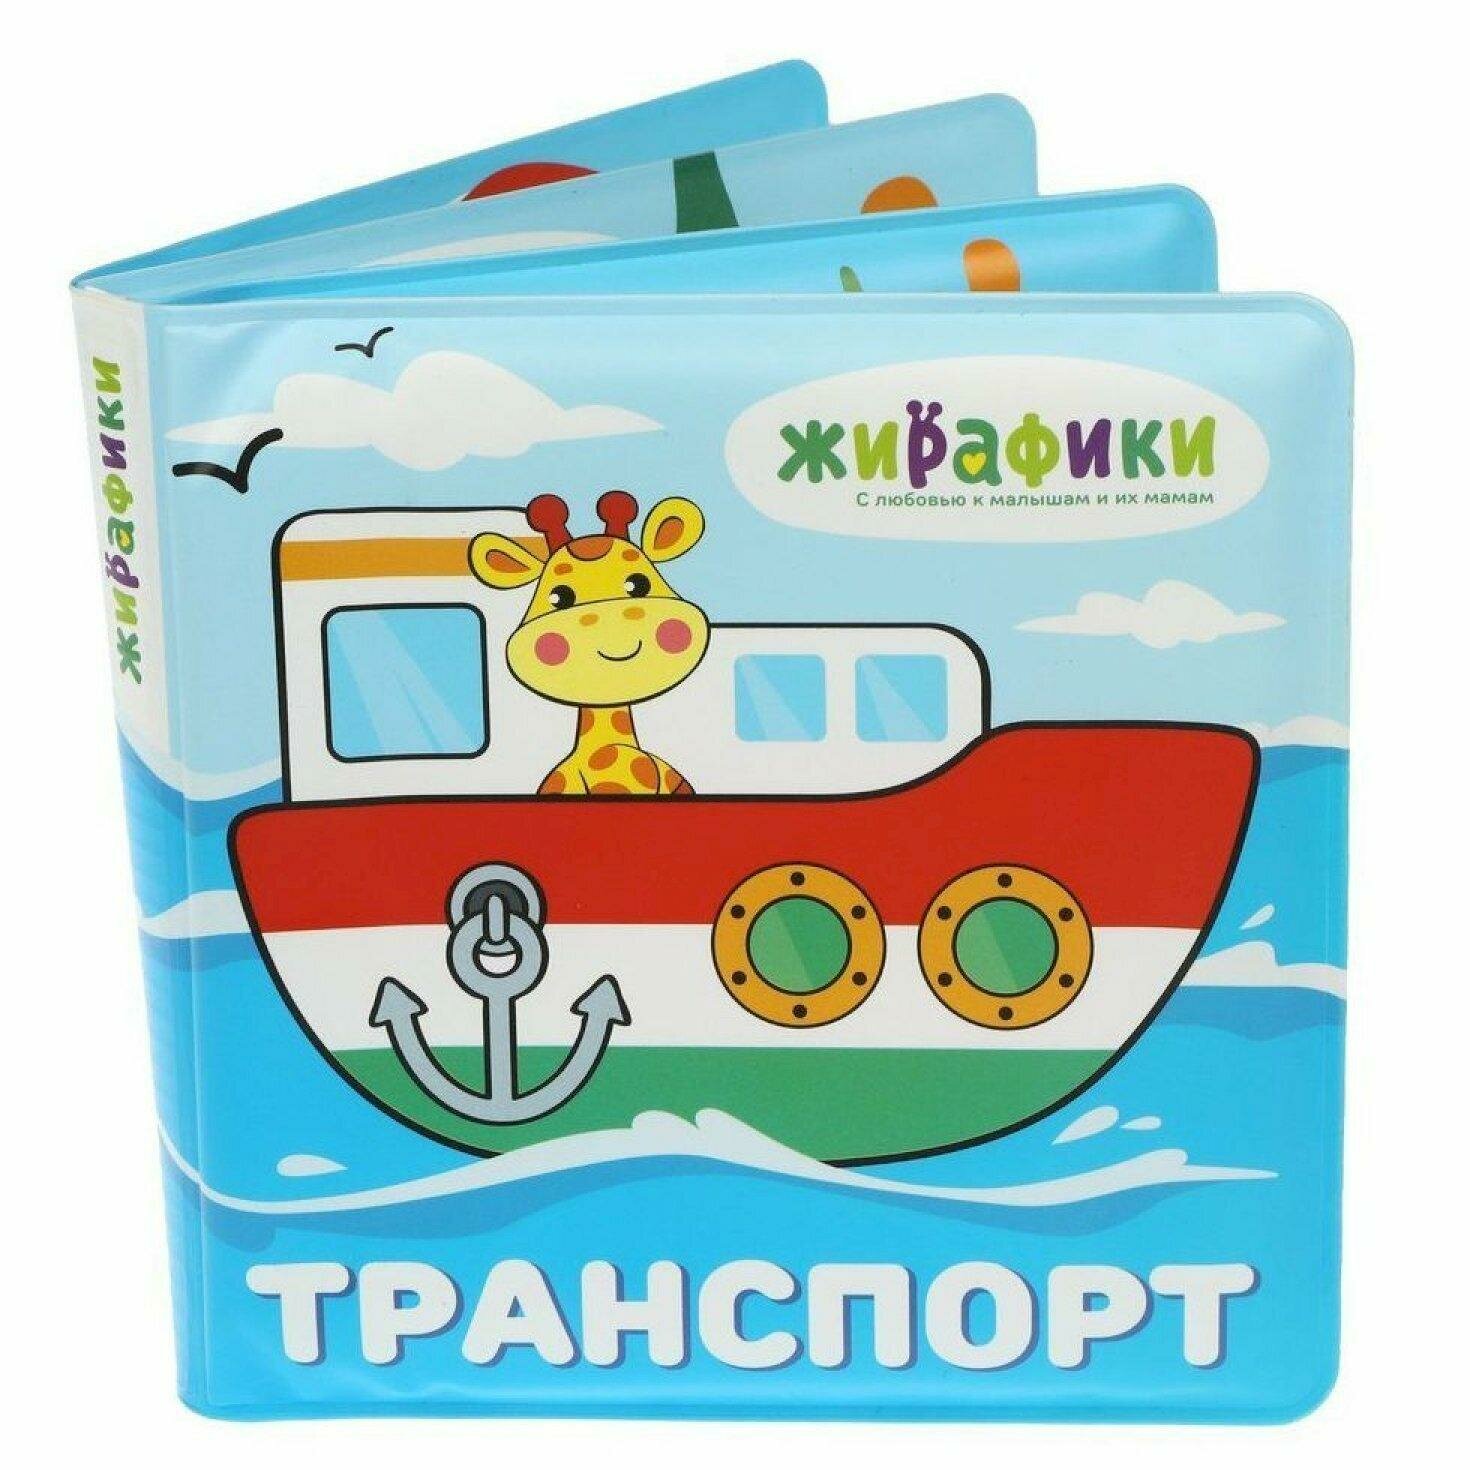 Игрушка-книжка Жирафики "Транспорт", для купания, 14х14 см, ПВХ